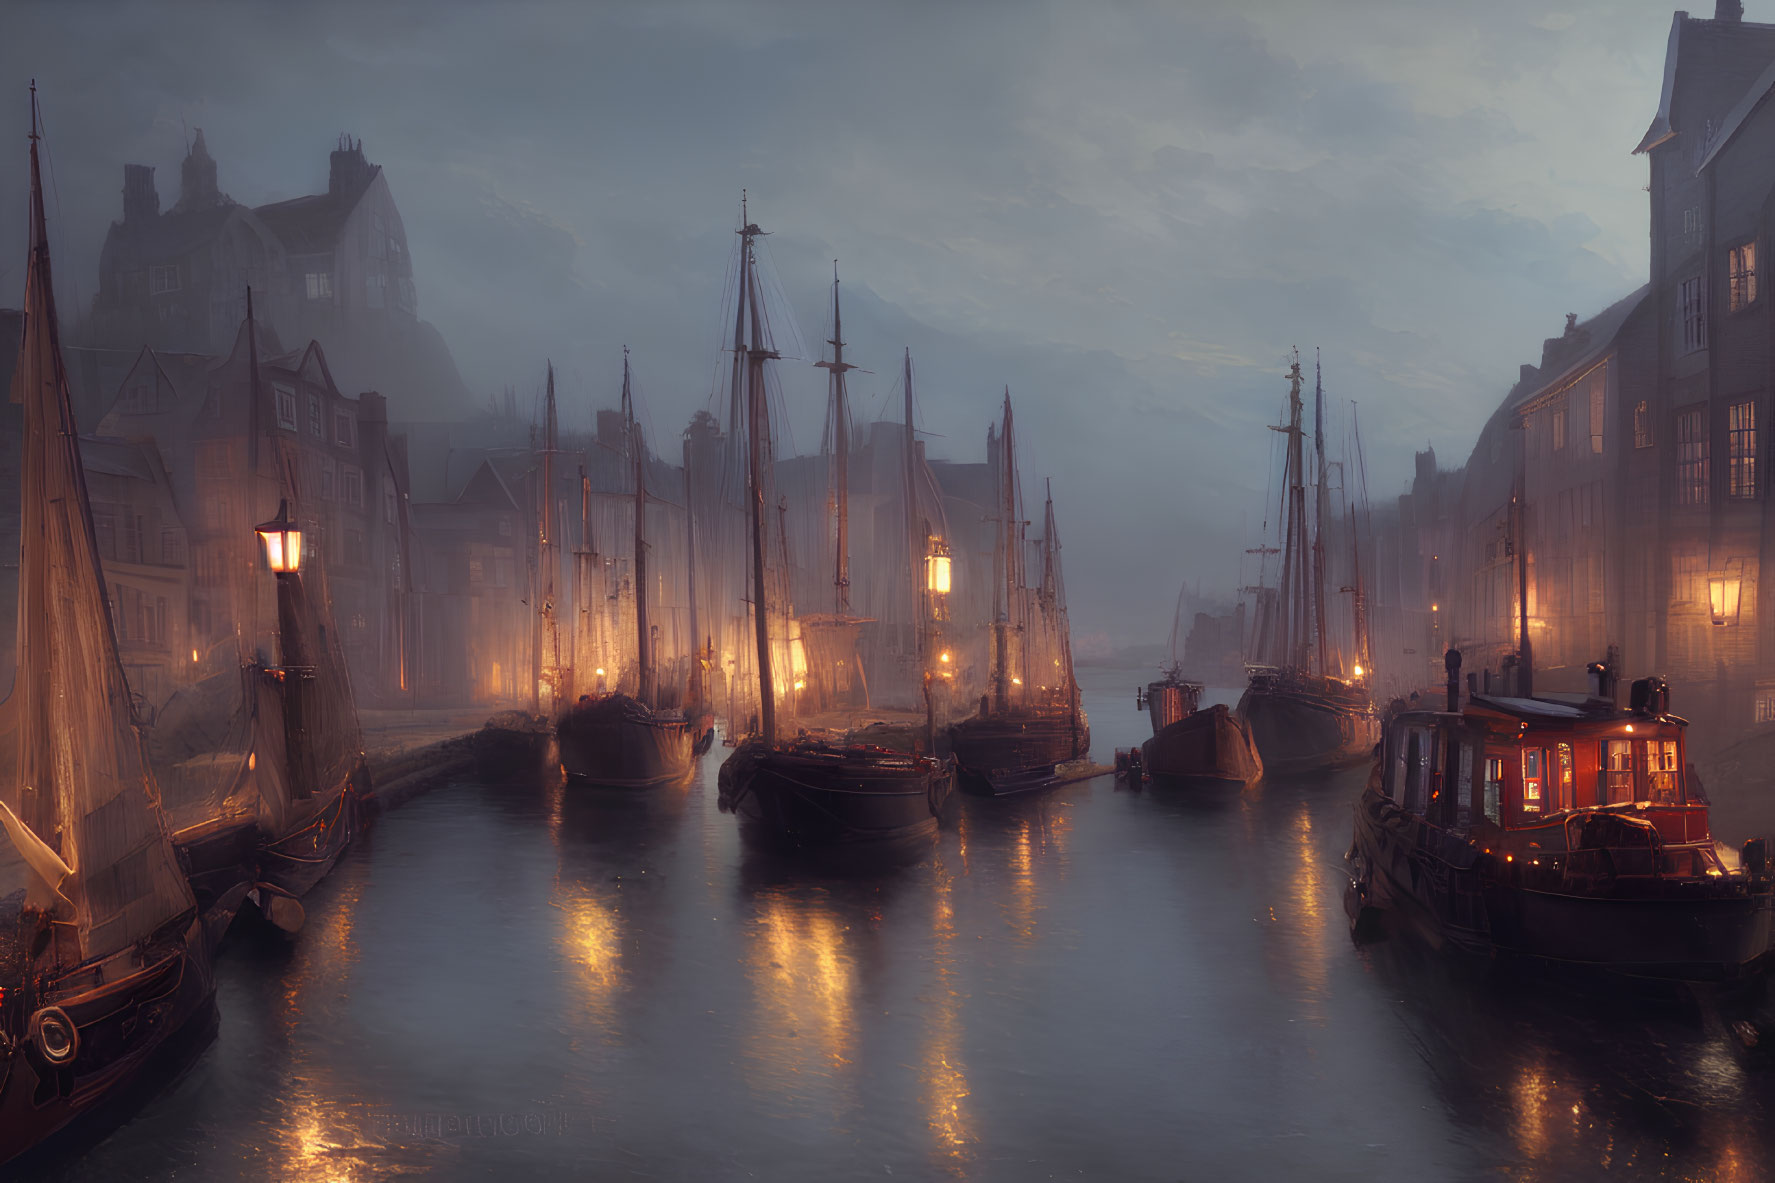 Vintage ships and illuminated lanterns in misty harbor at dusk